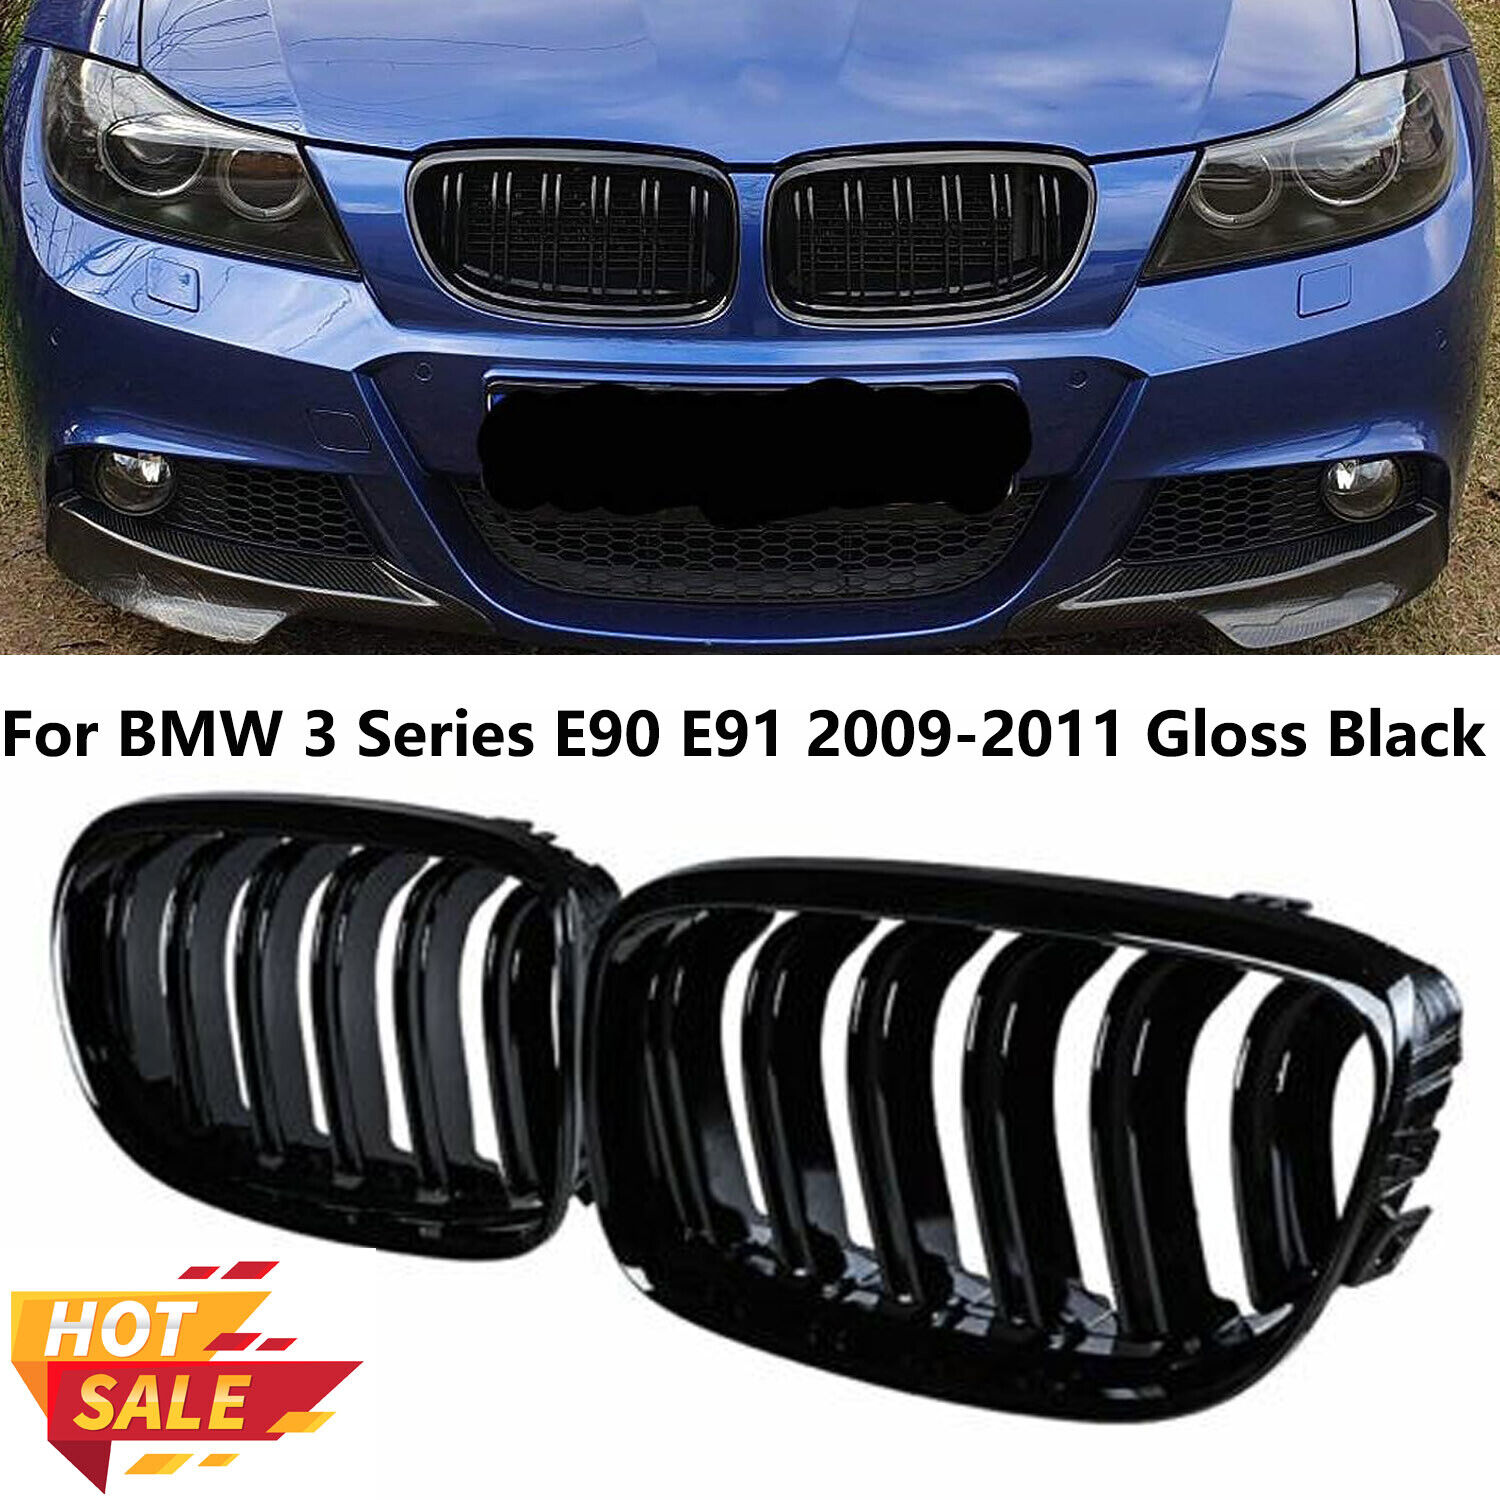 Gloss Black Front Kidney Grille For BMW 3 Series E90 E91 325i 328i LCI 2009-11